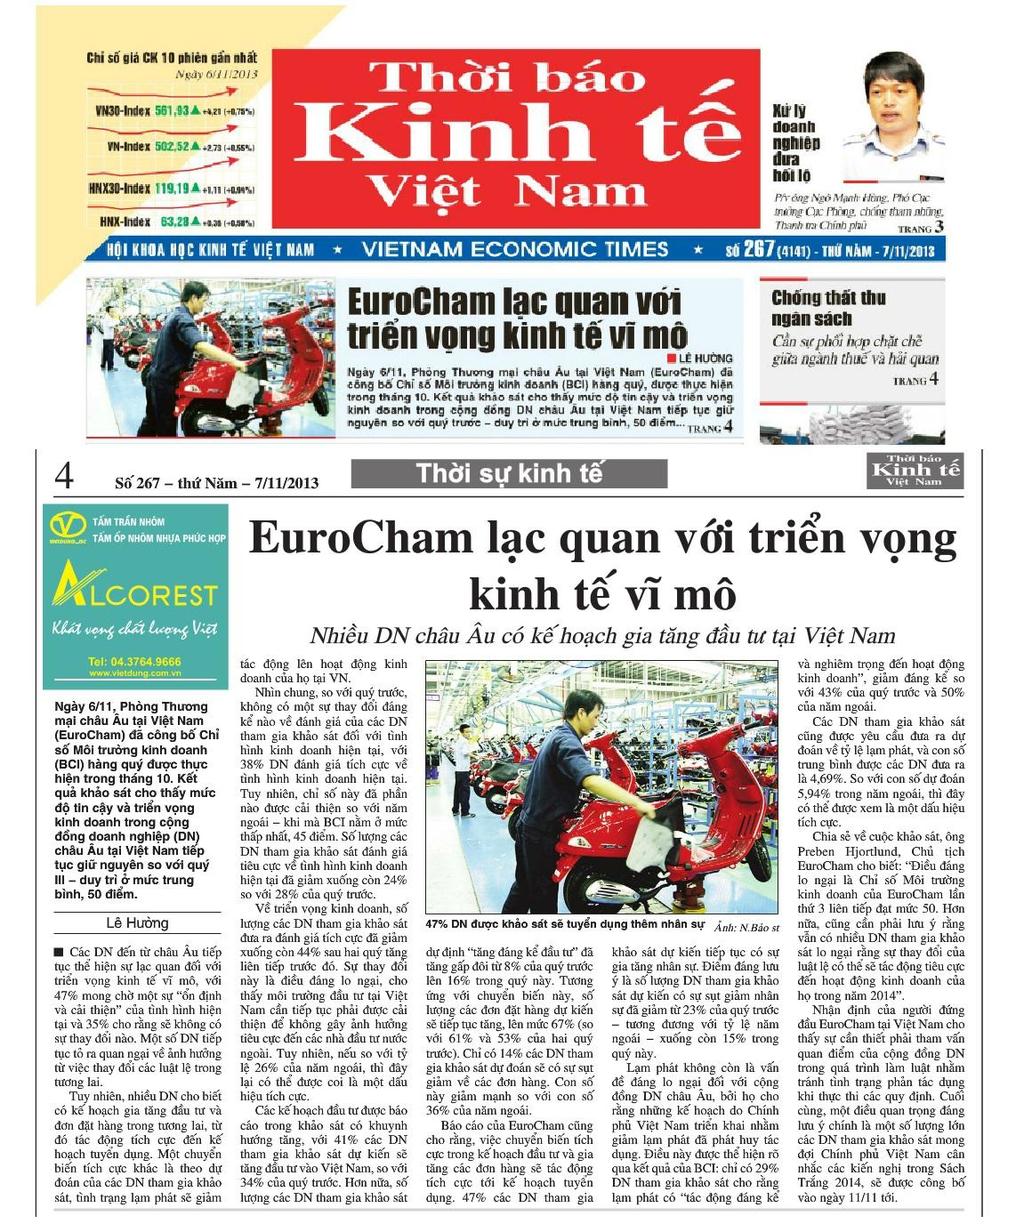 2. Vietnam Economic Times EuroCham is